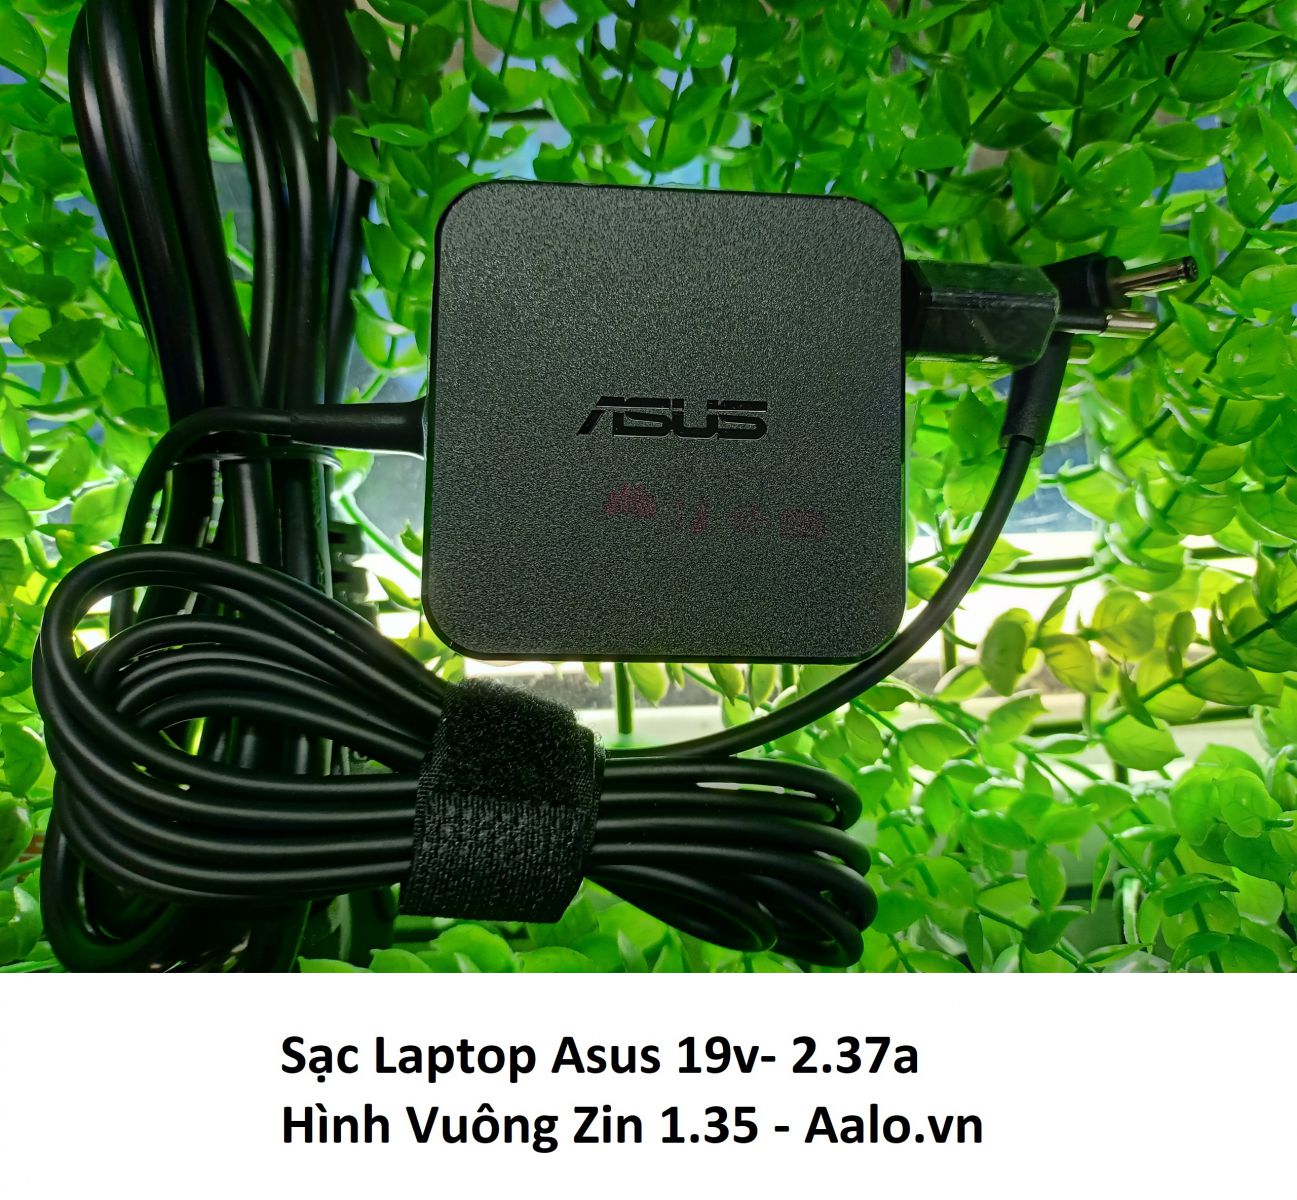 Sạc Laptop Asus 19v- 2.37a Hình Vuông Zin 1.35